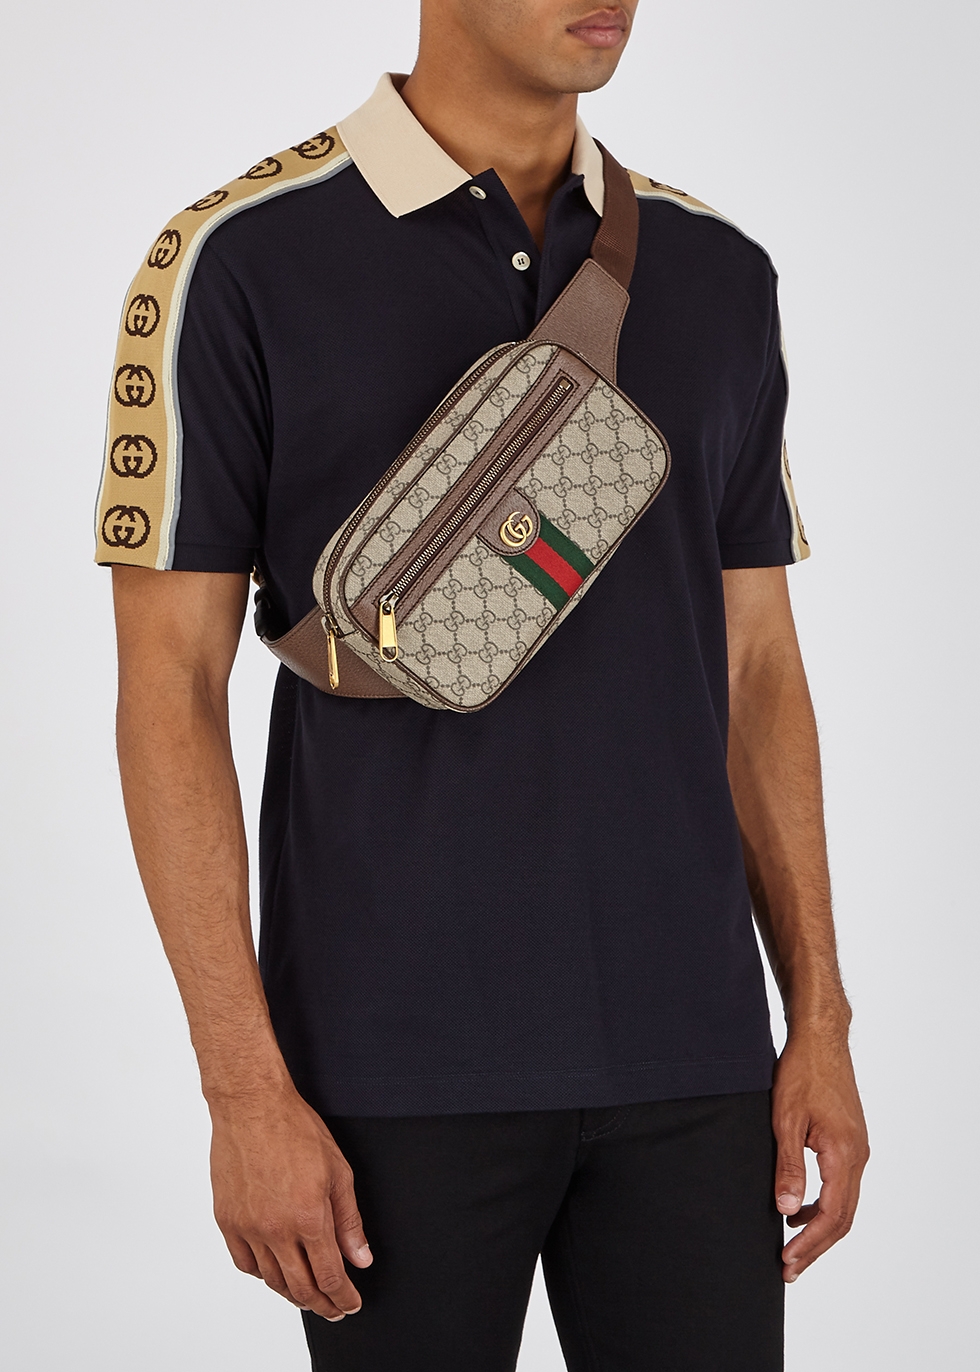 Gucci Ophidia Waist Bag Top Sellers, 58% OFF | www.ingeniovirtual.com